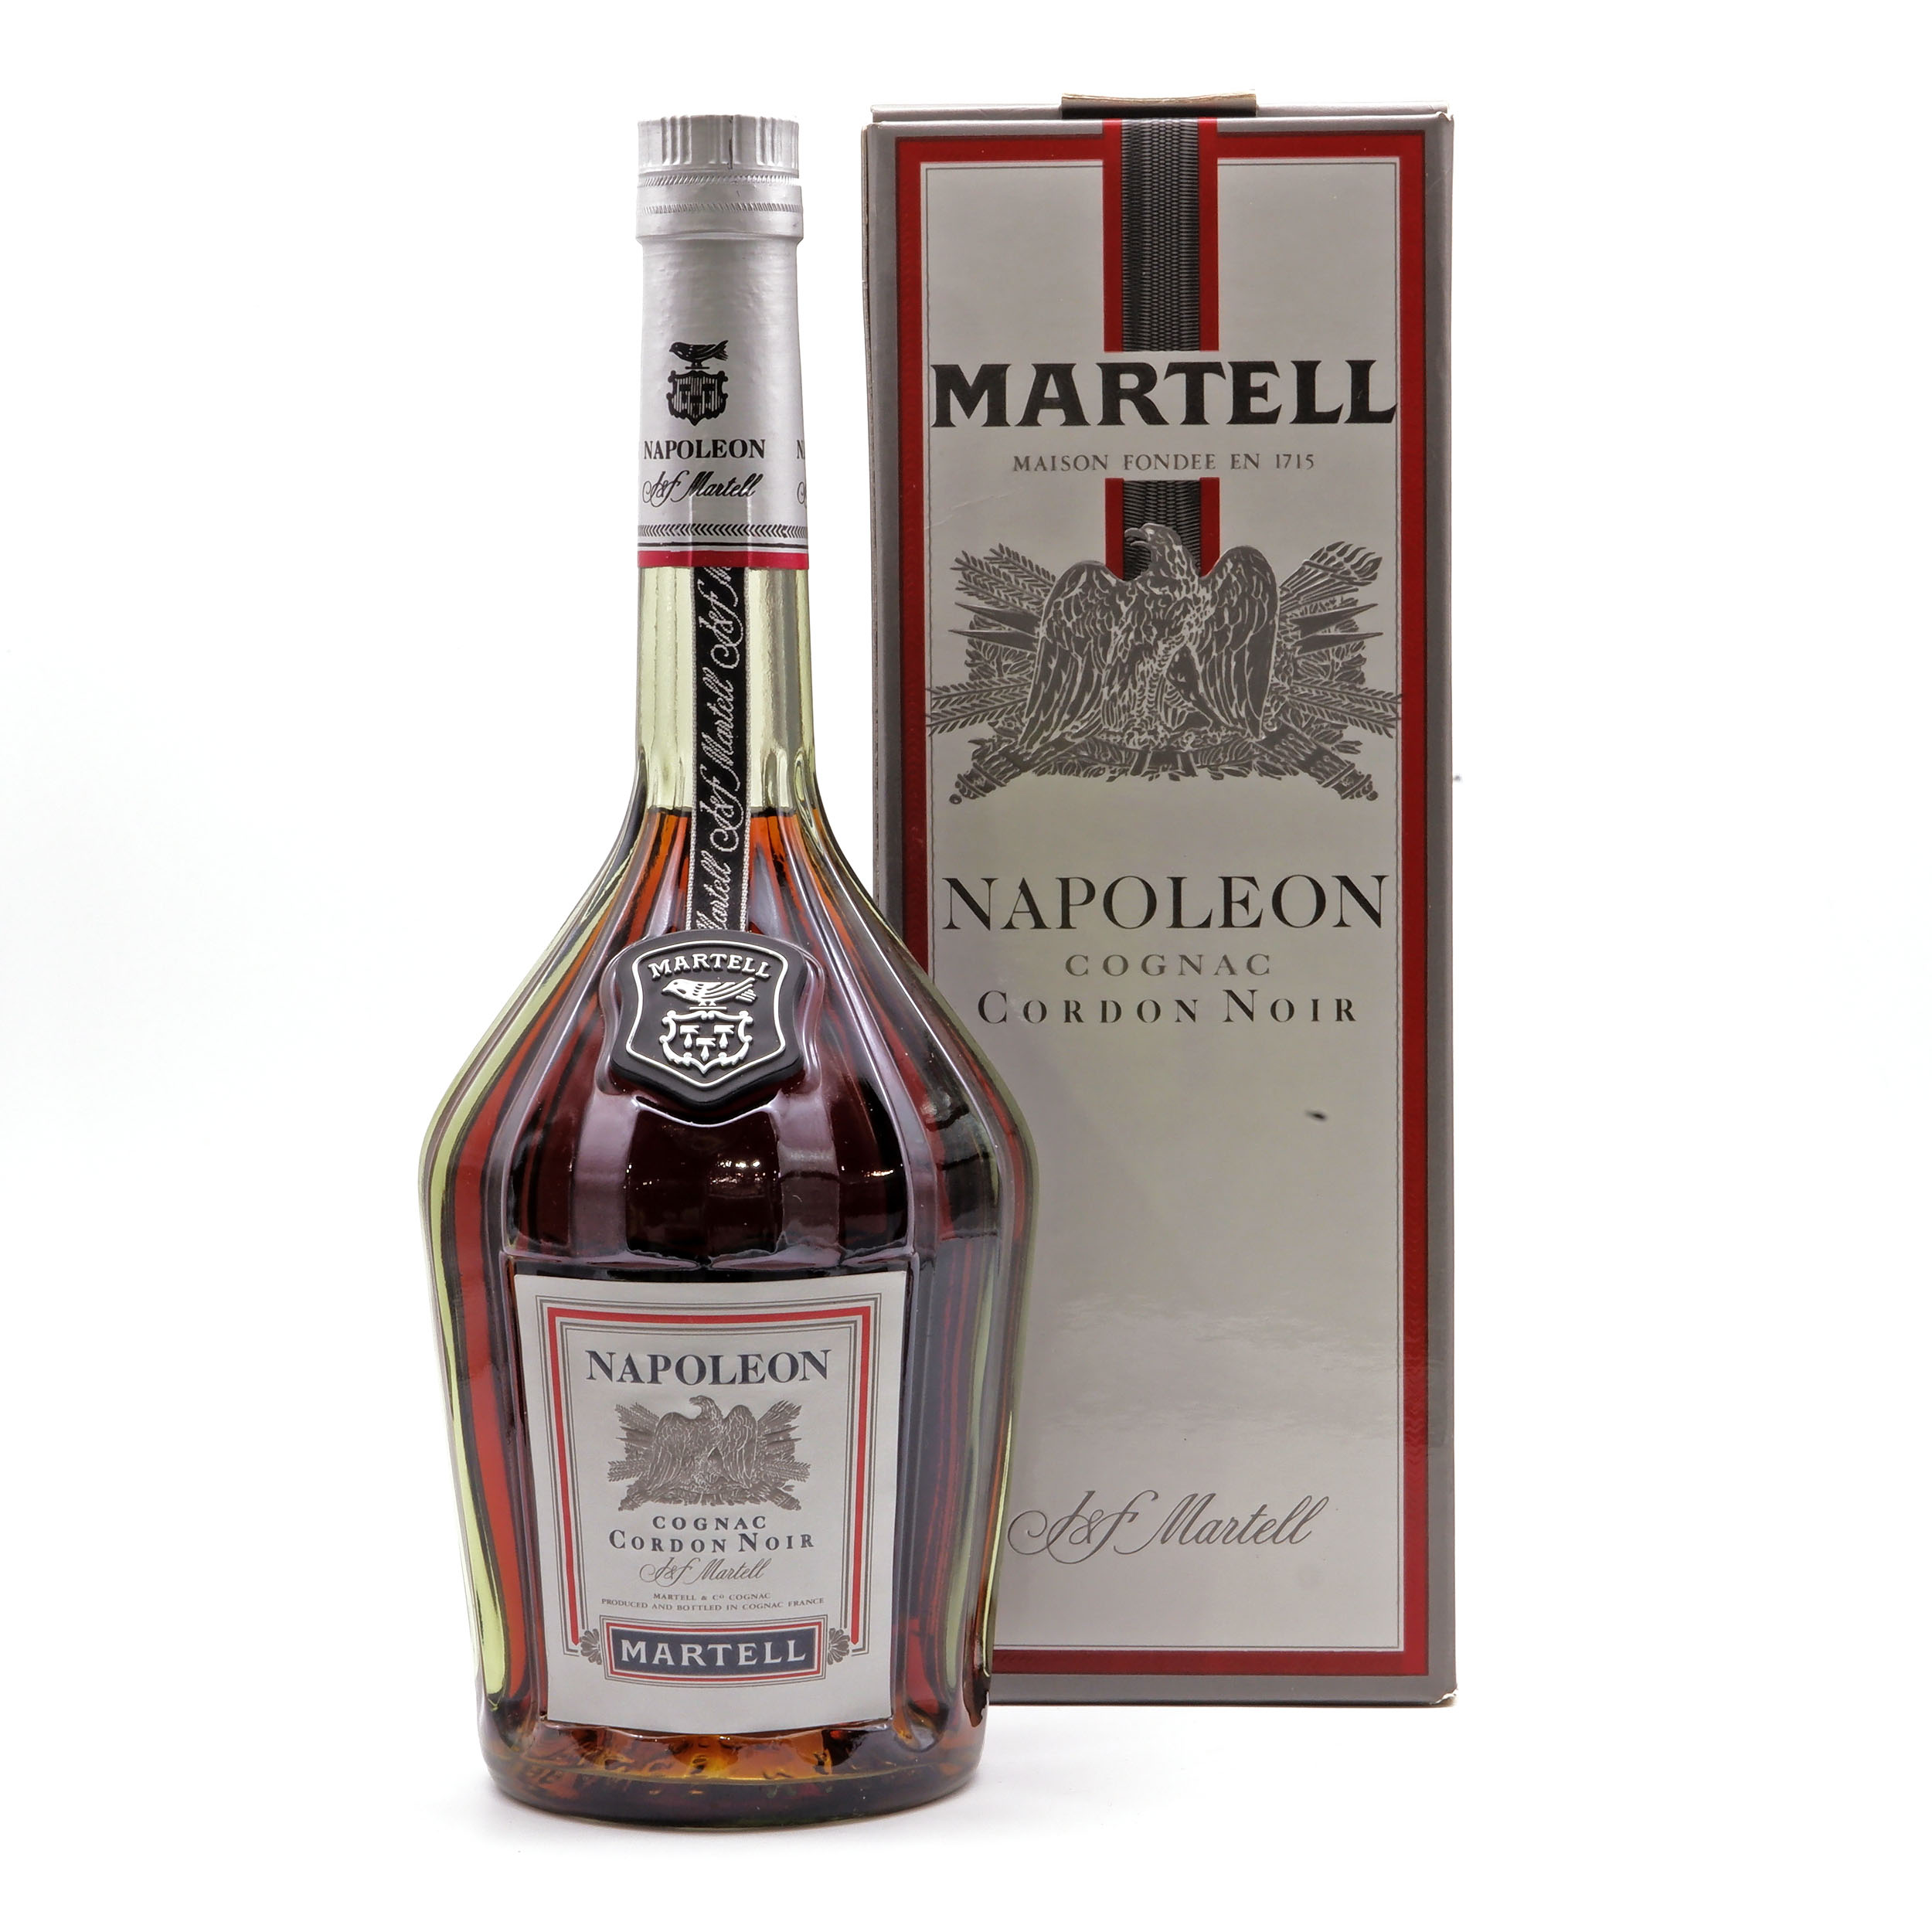 Martell Napoleon Cognac Cordon Noir 700ml